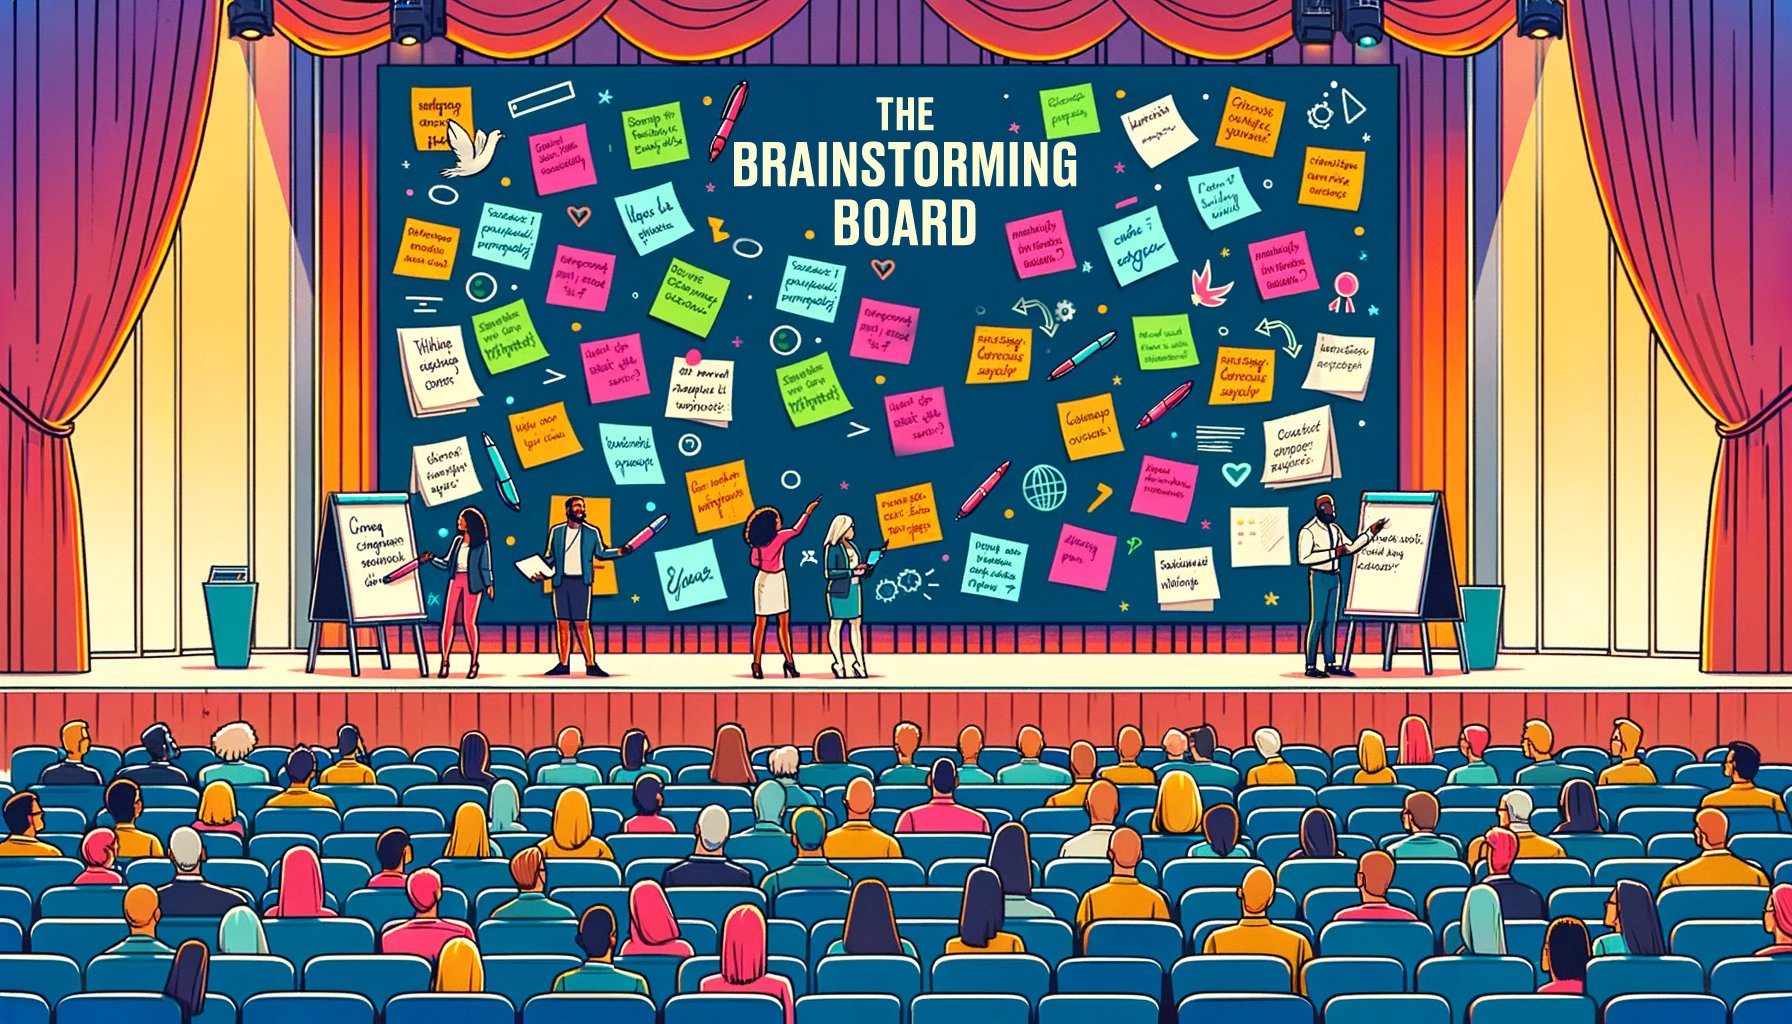 The Brainstorming Board